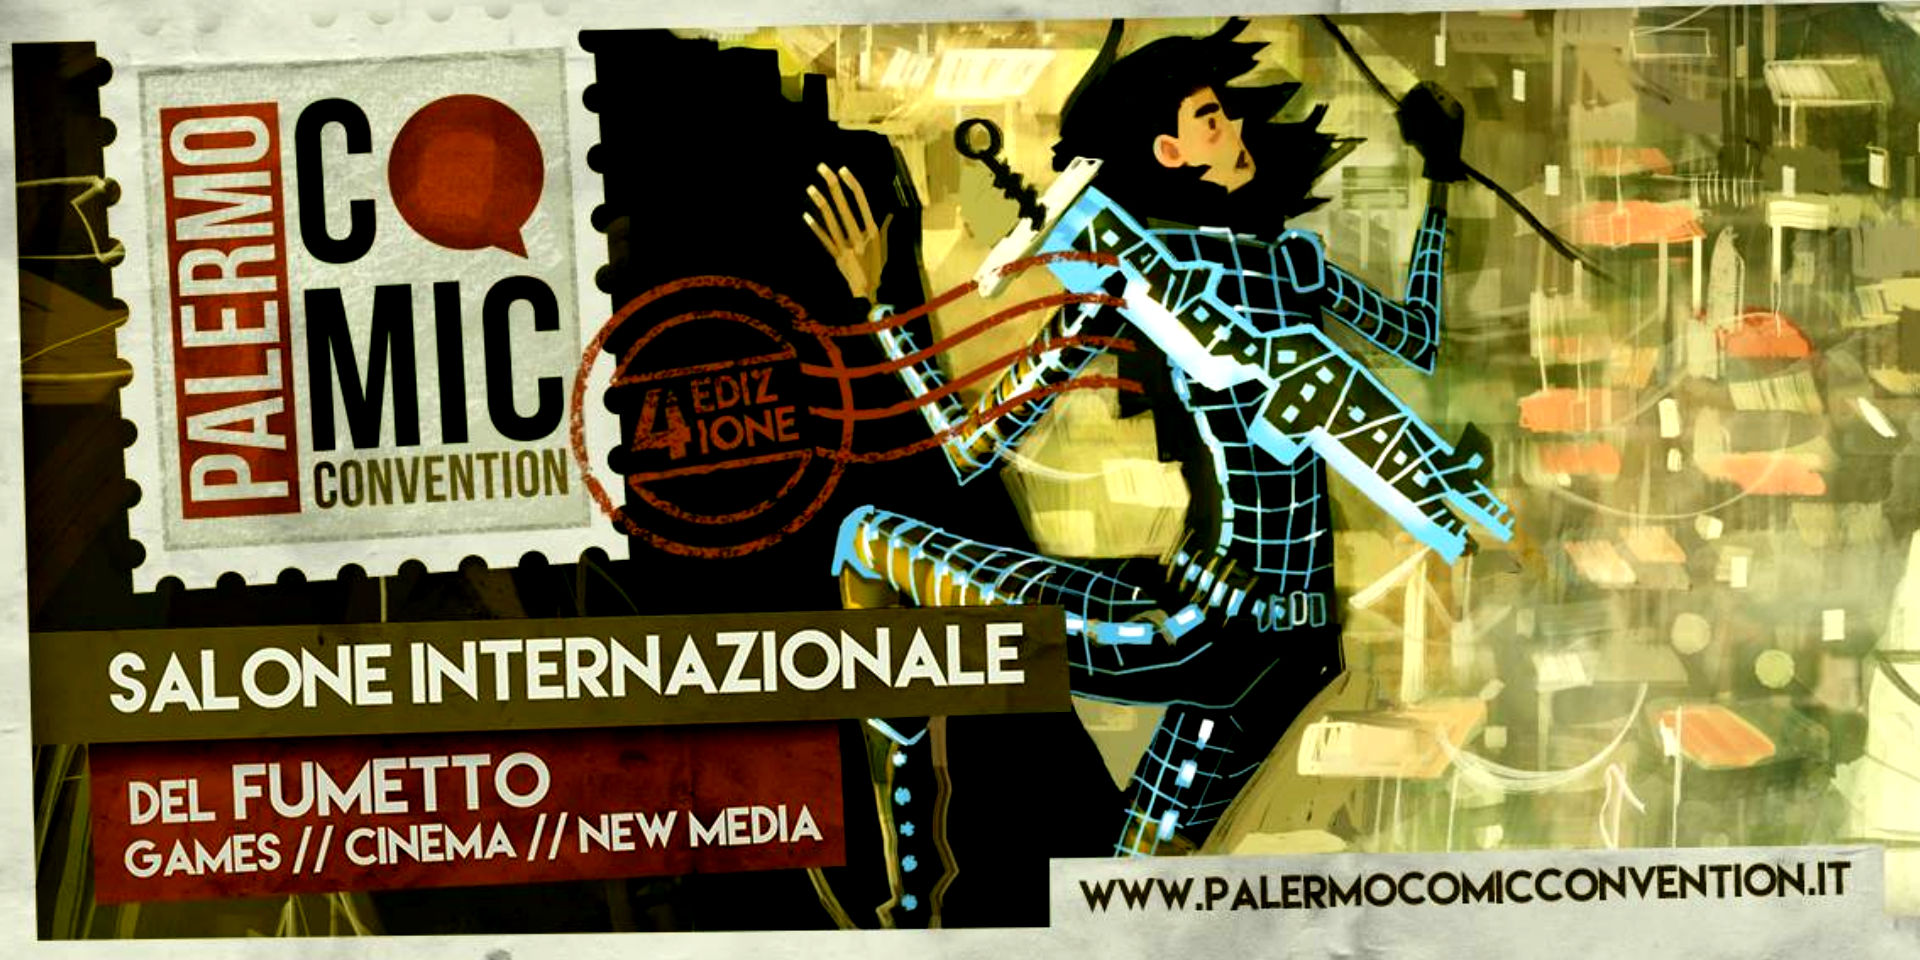 Palermo Comic Convention IV